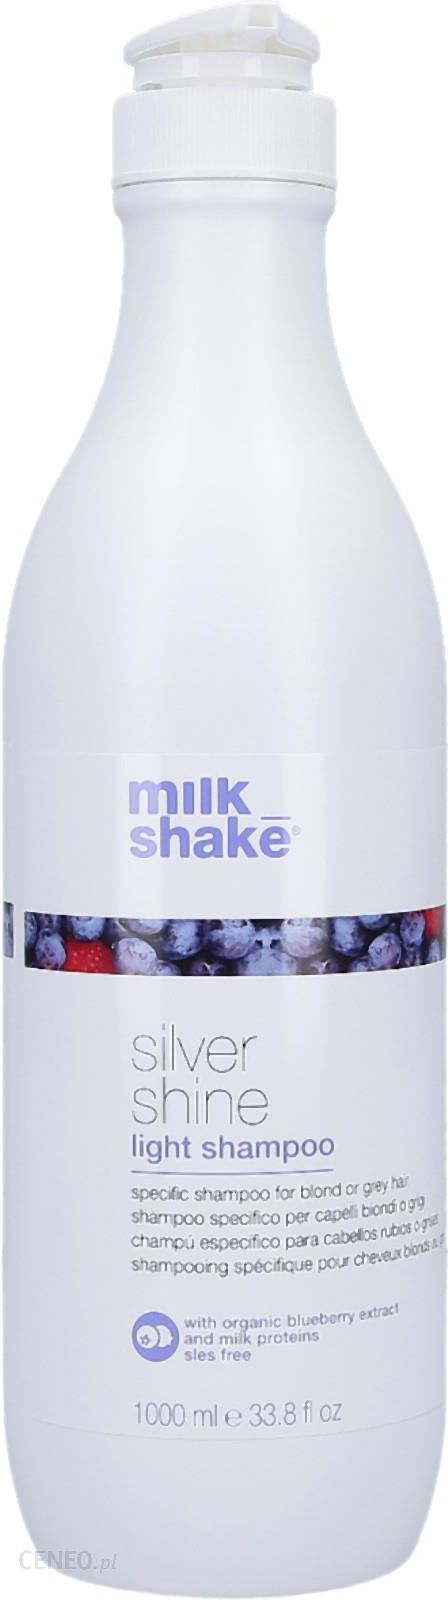 milk shake silver shine szampon opinie